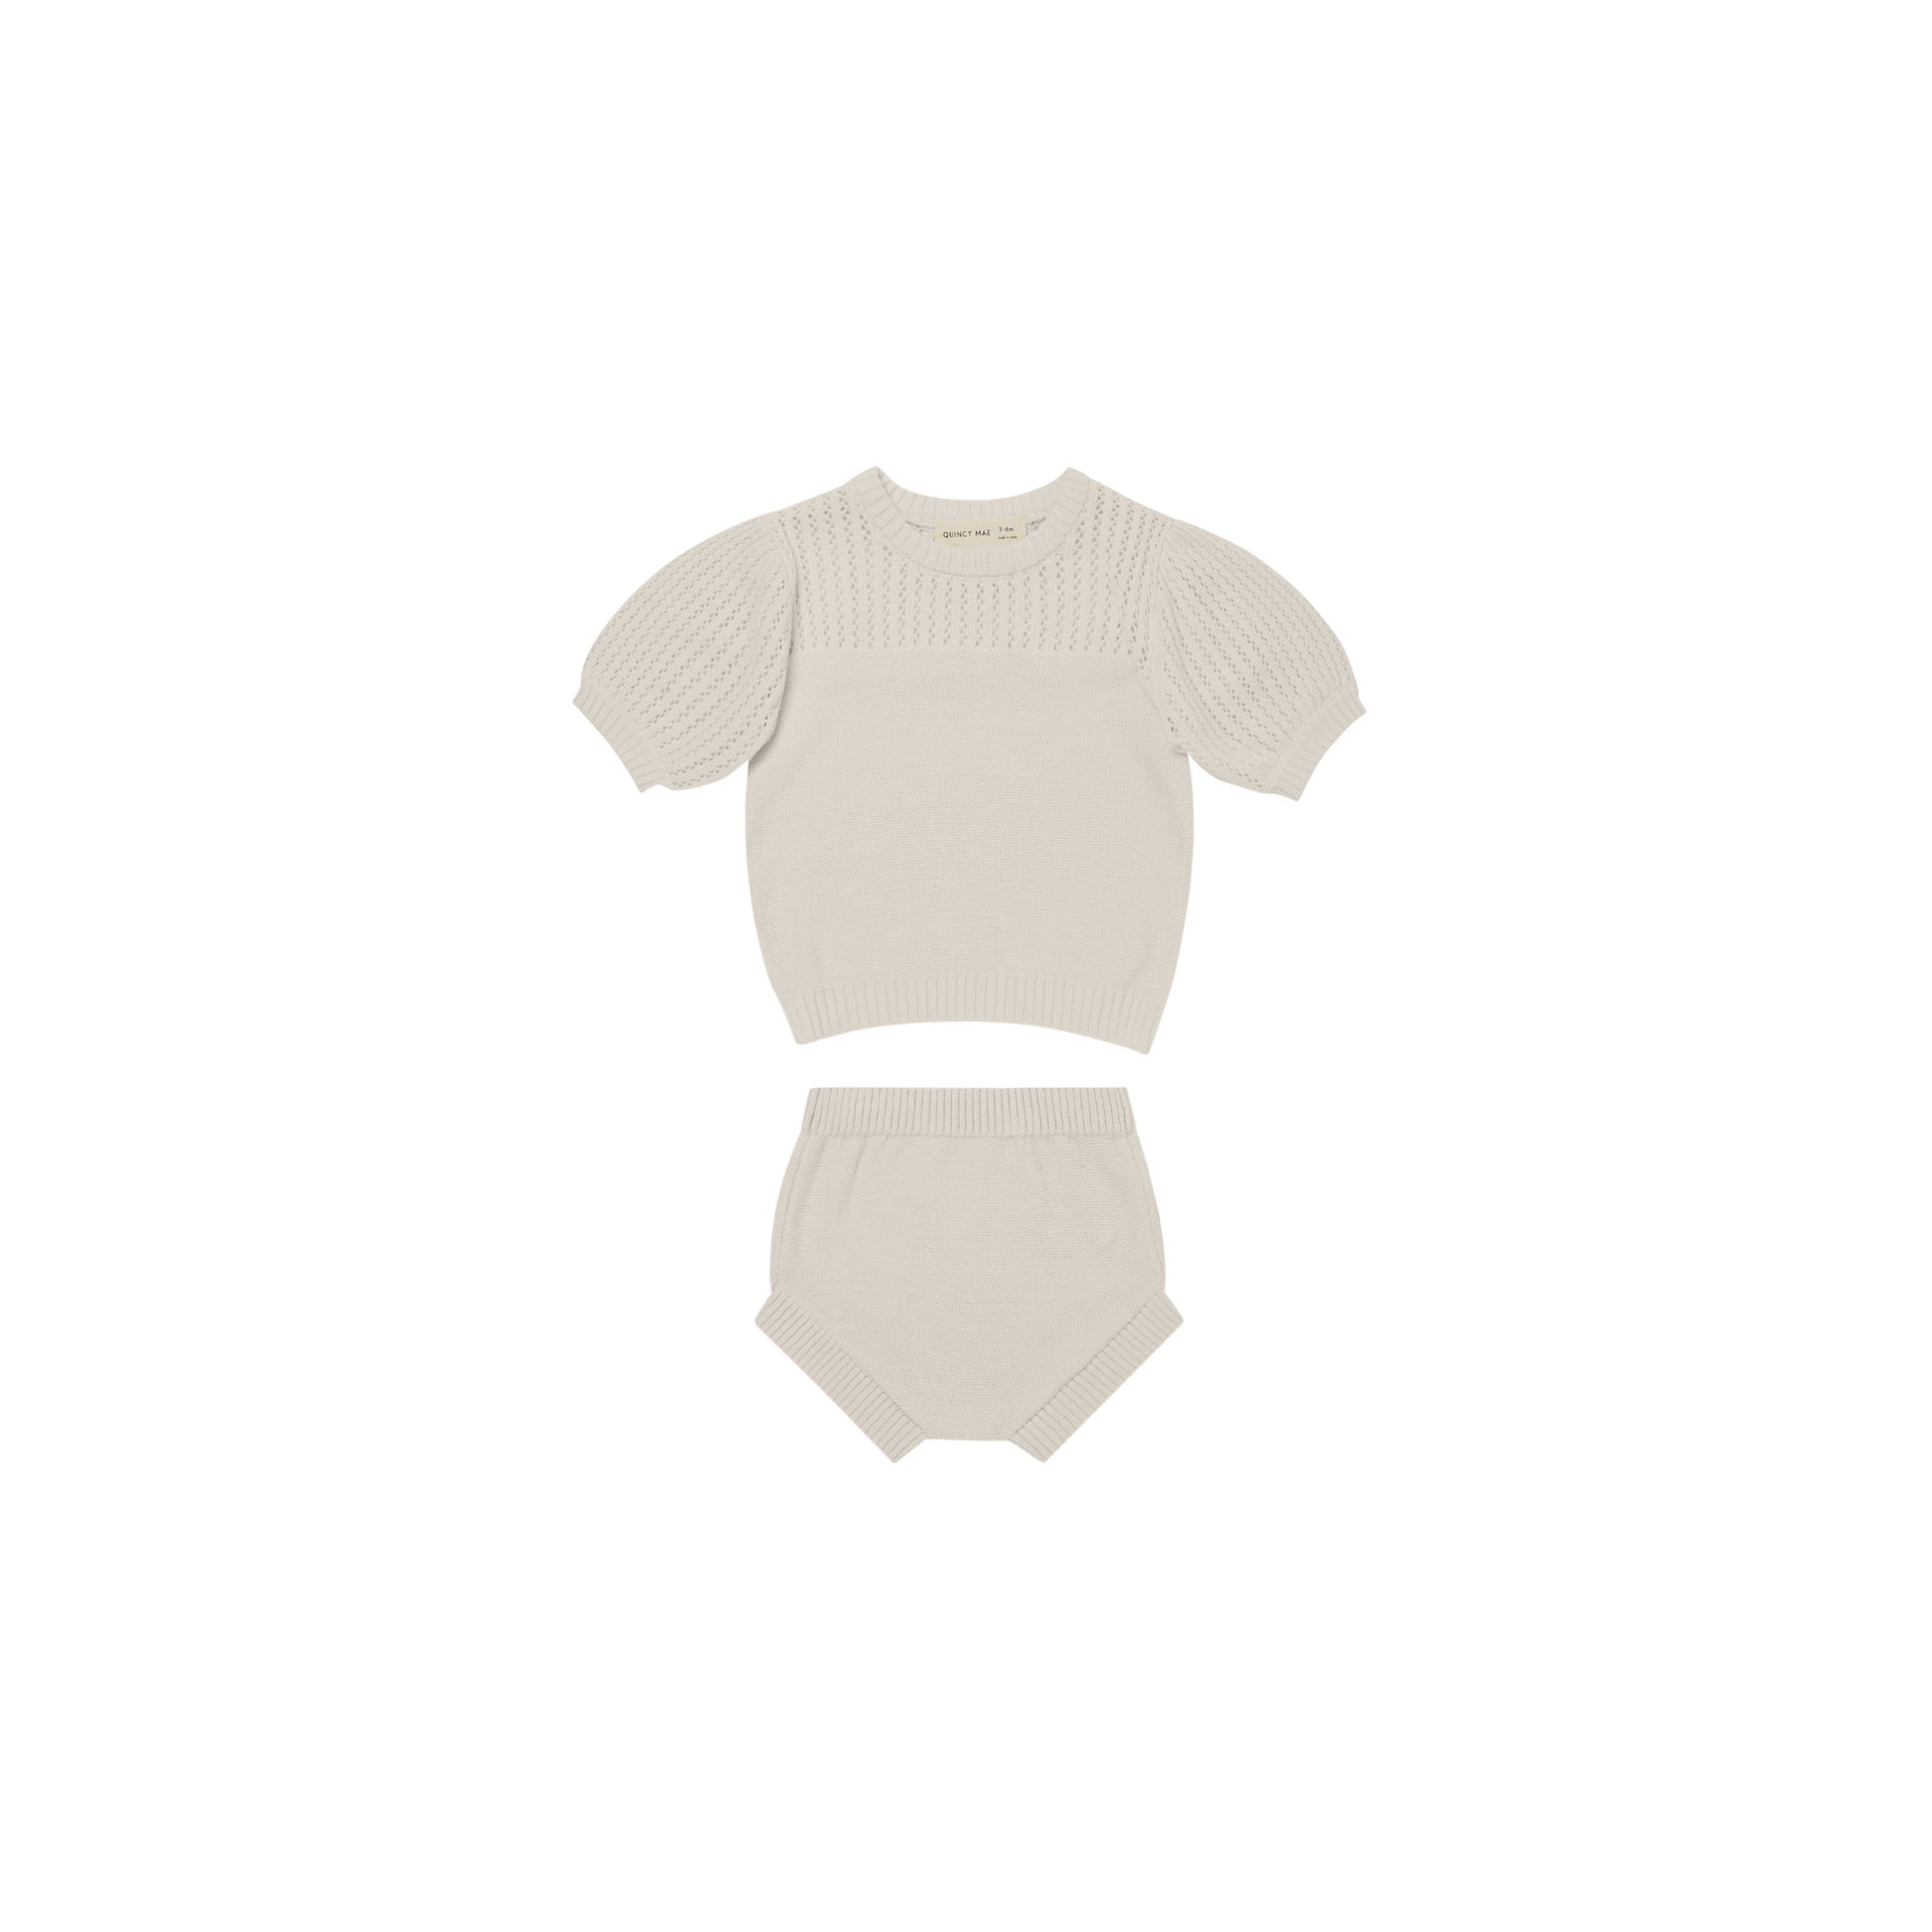 Pointelle-knit organic cotton shorts